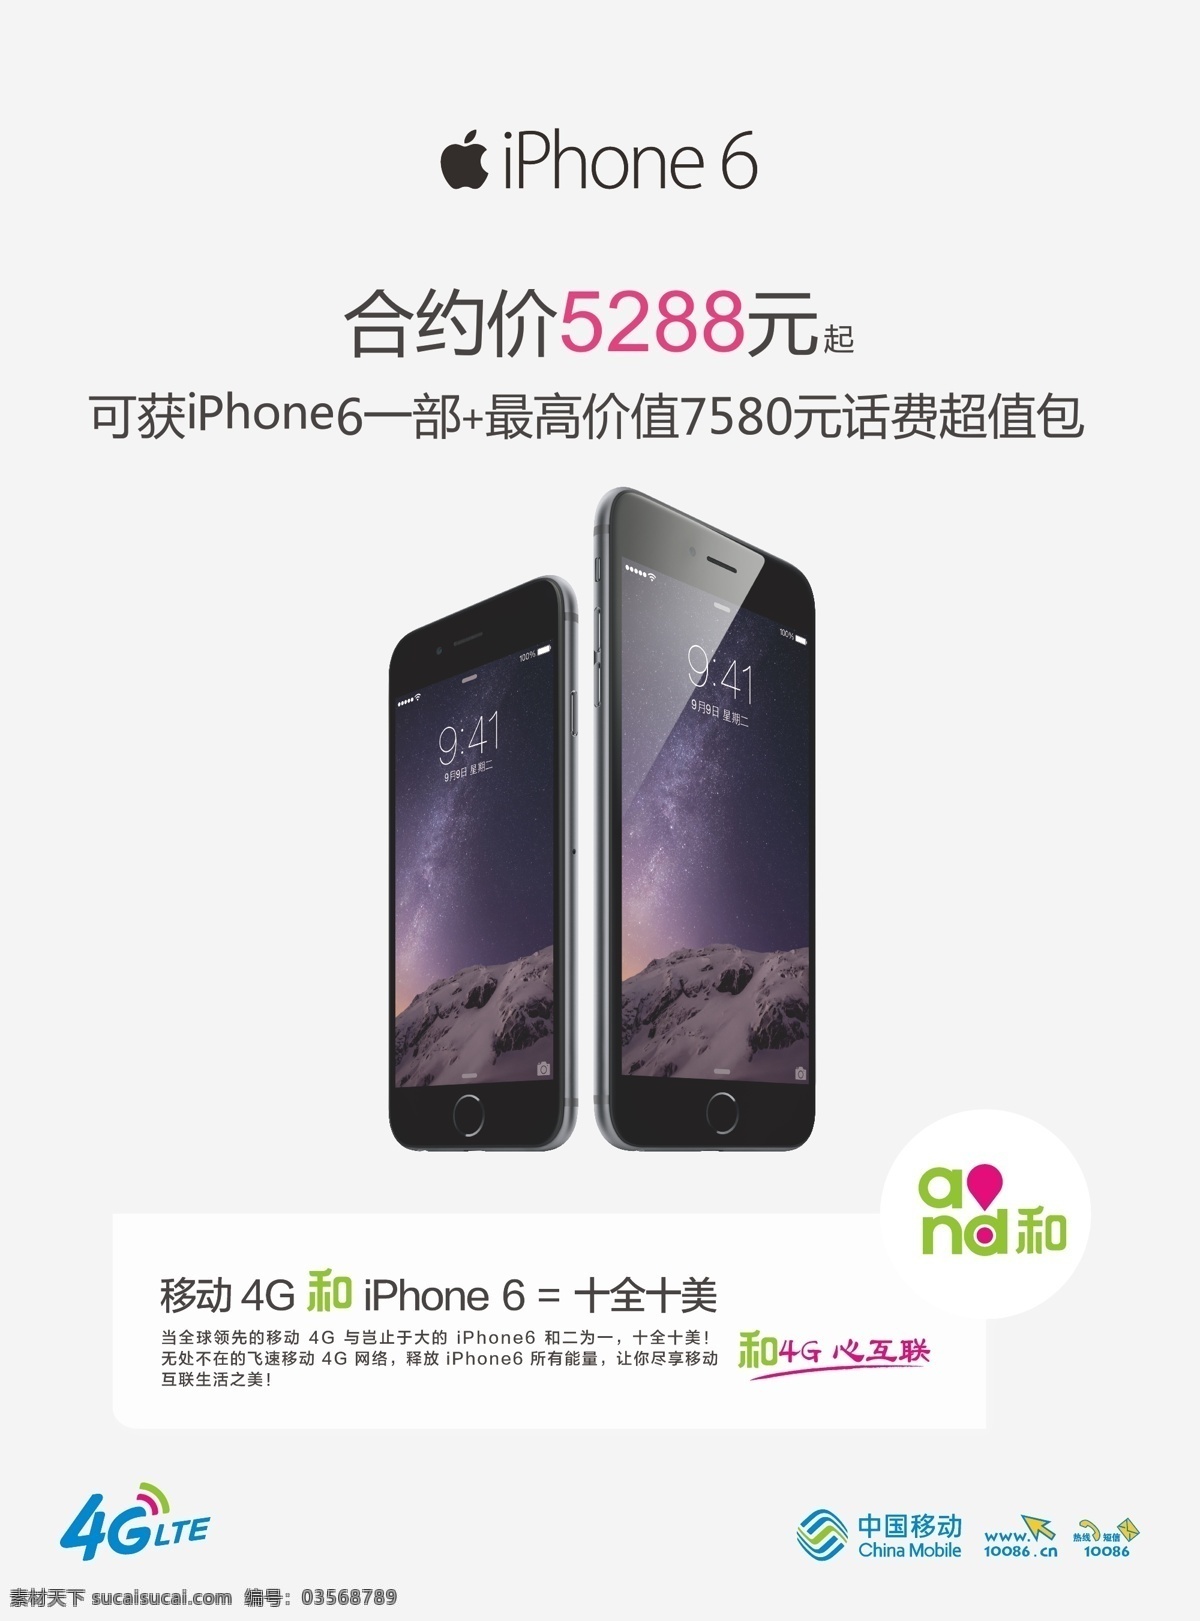 iphone6 广告 iphone 苹果6 and和 4glte 中国移动 4g 矢量文件 广告模版 单页